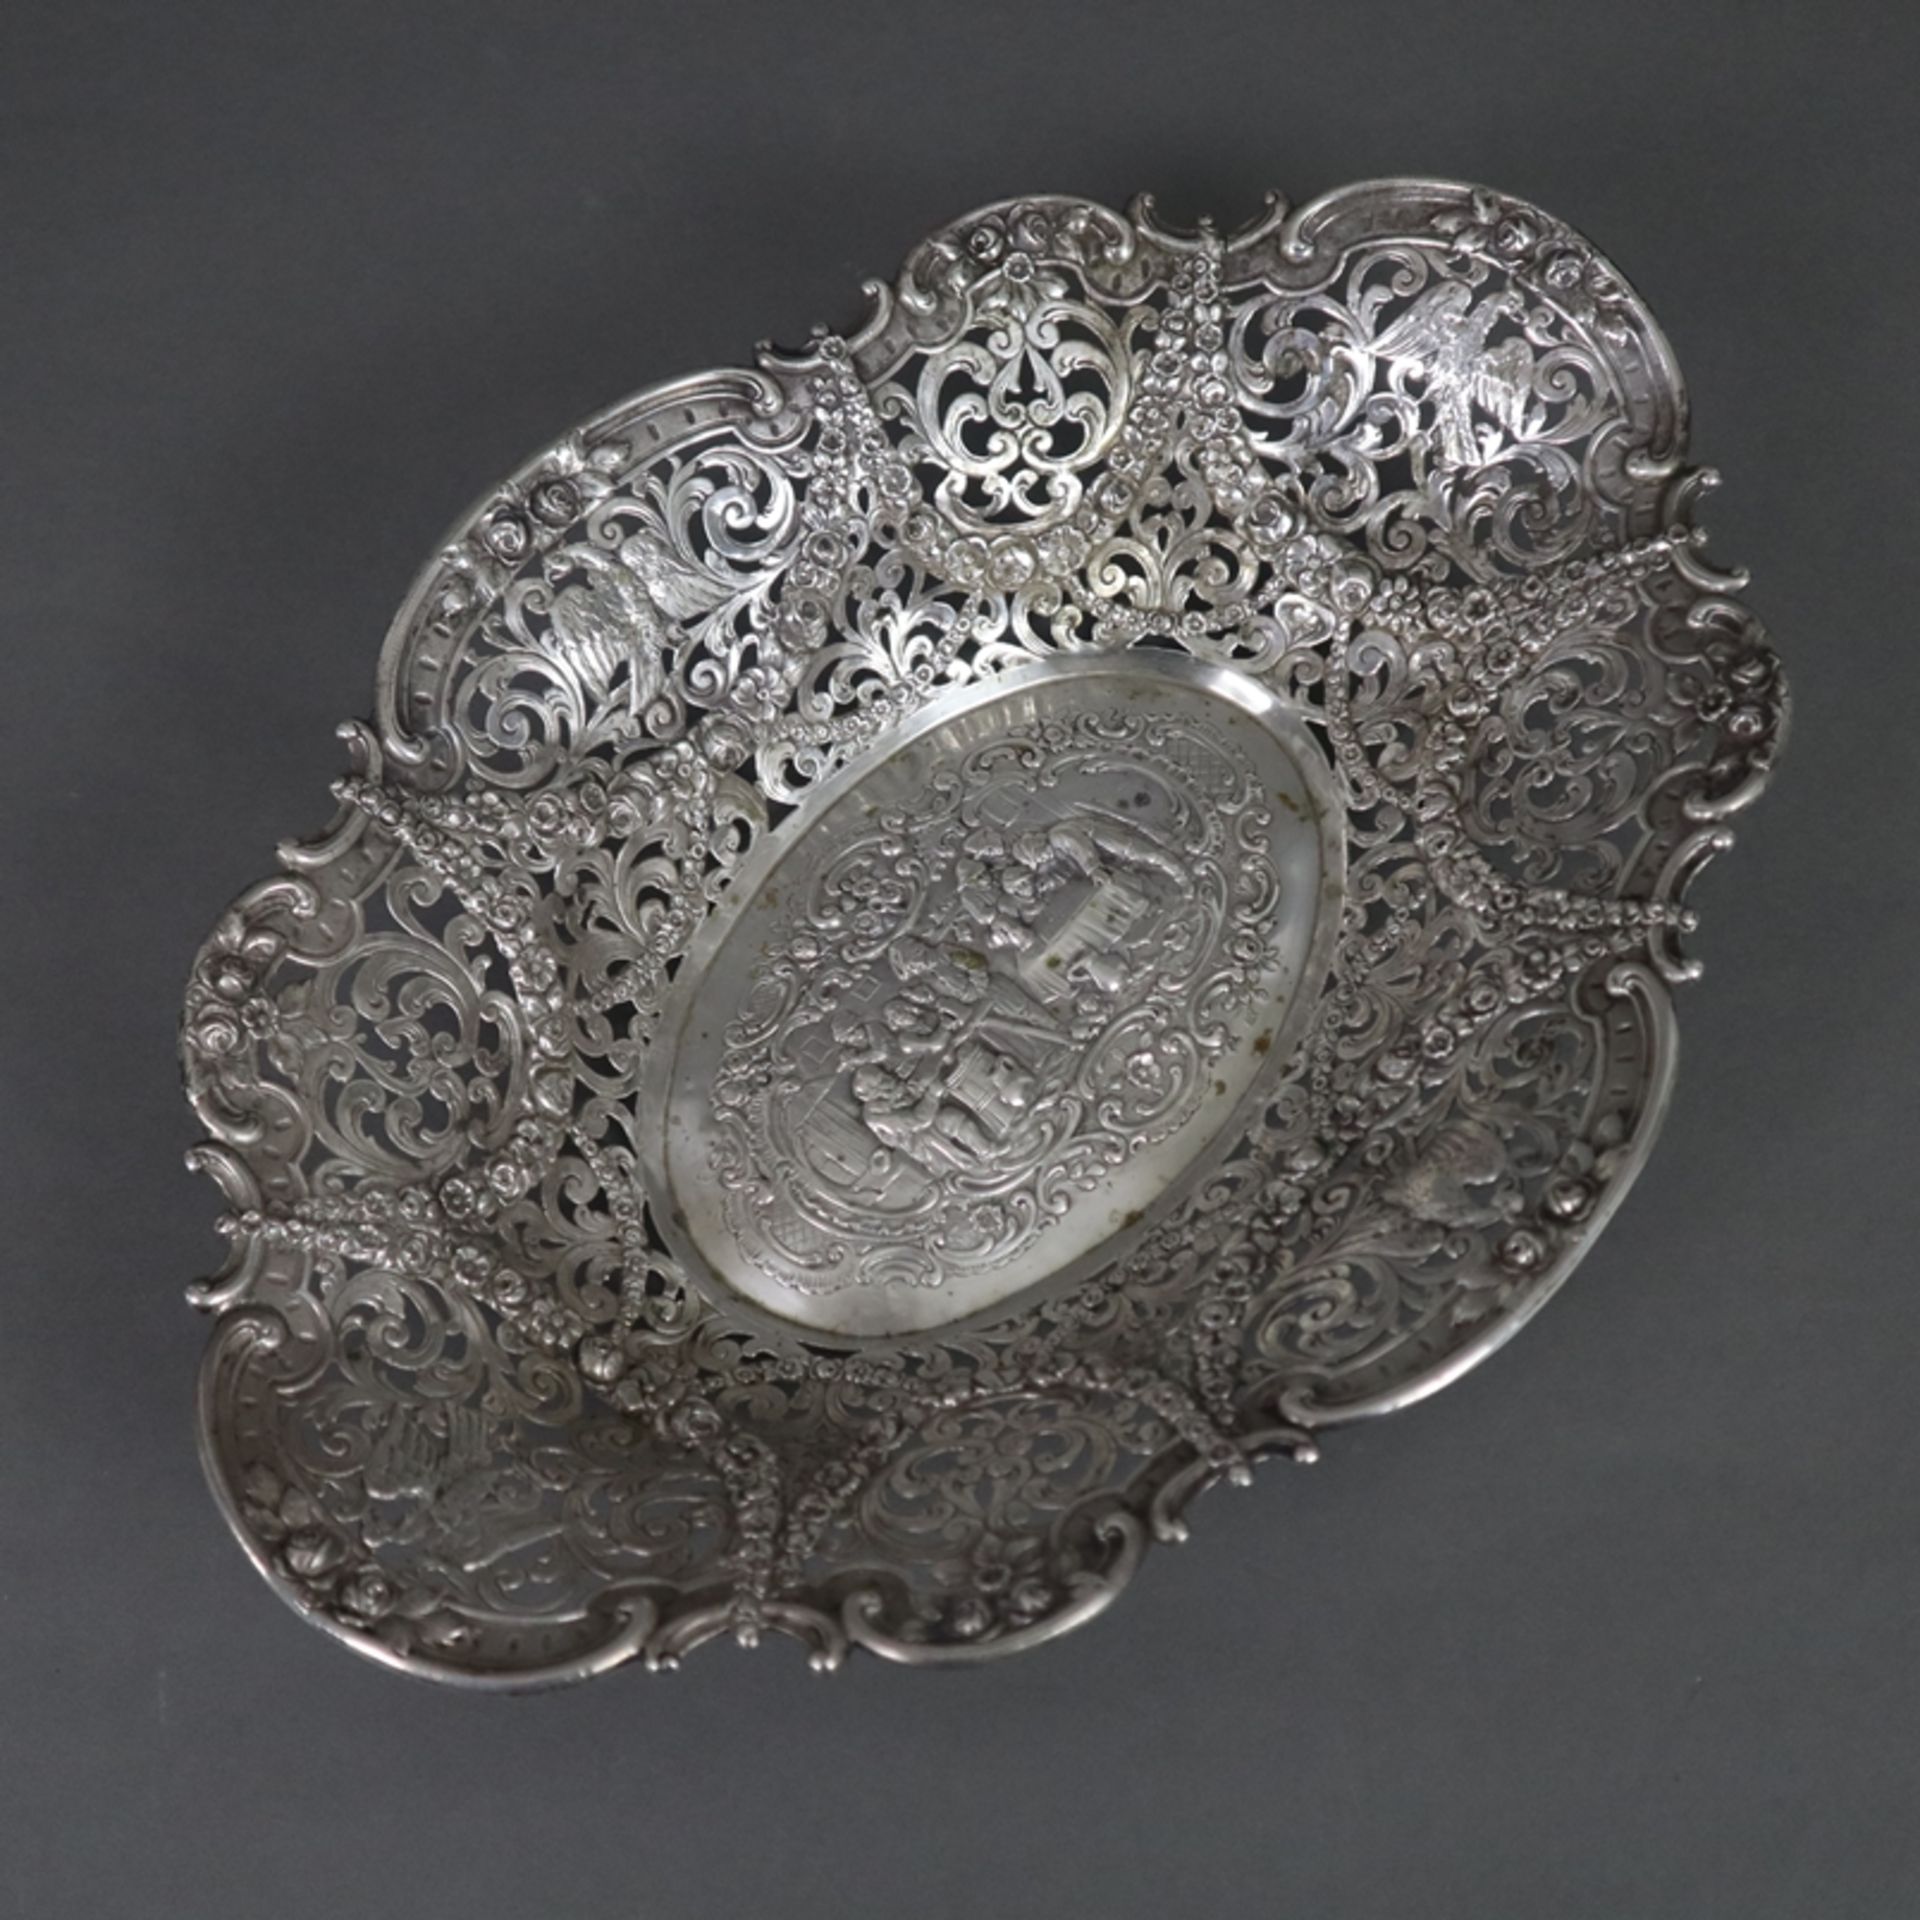 Üppig dekorierte Korbschale - deutsch, Silber 800/000, gestempelt, oval, geschweifte filigran durch